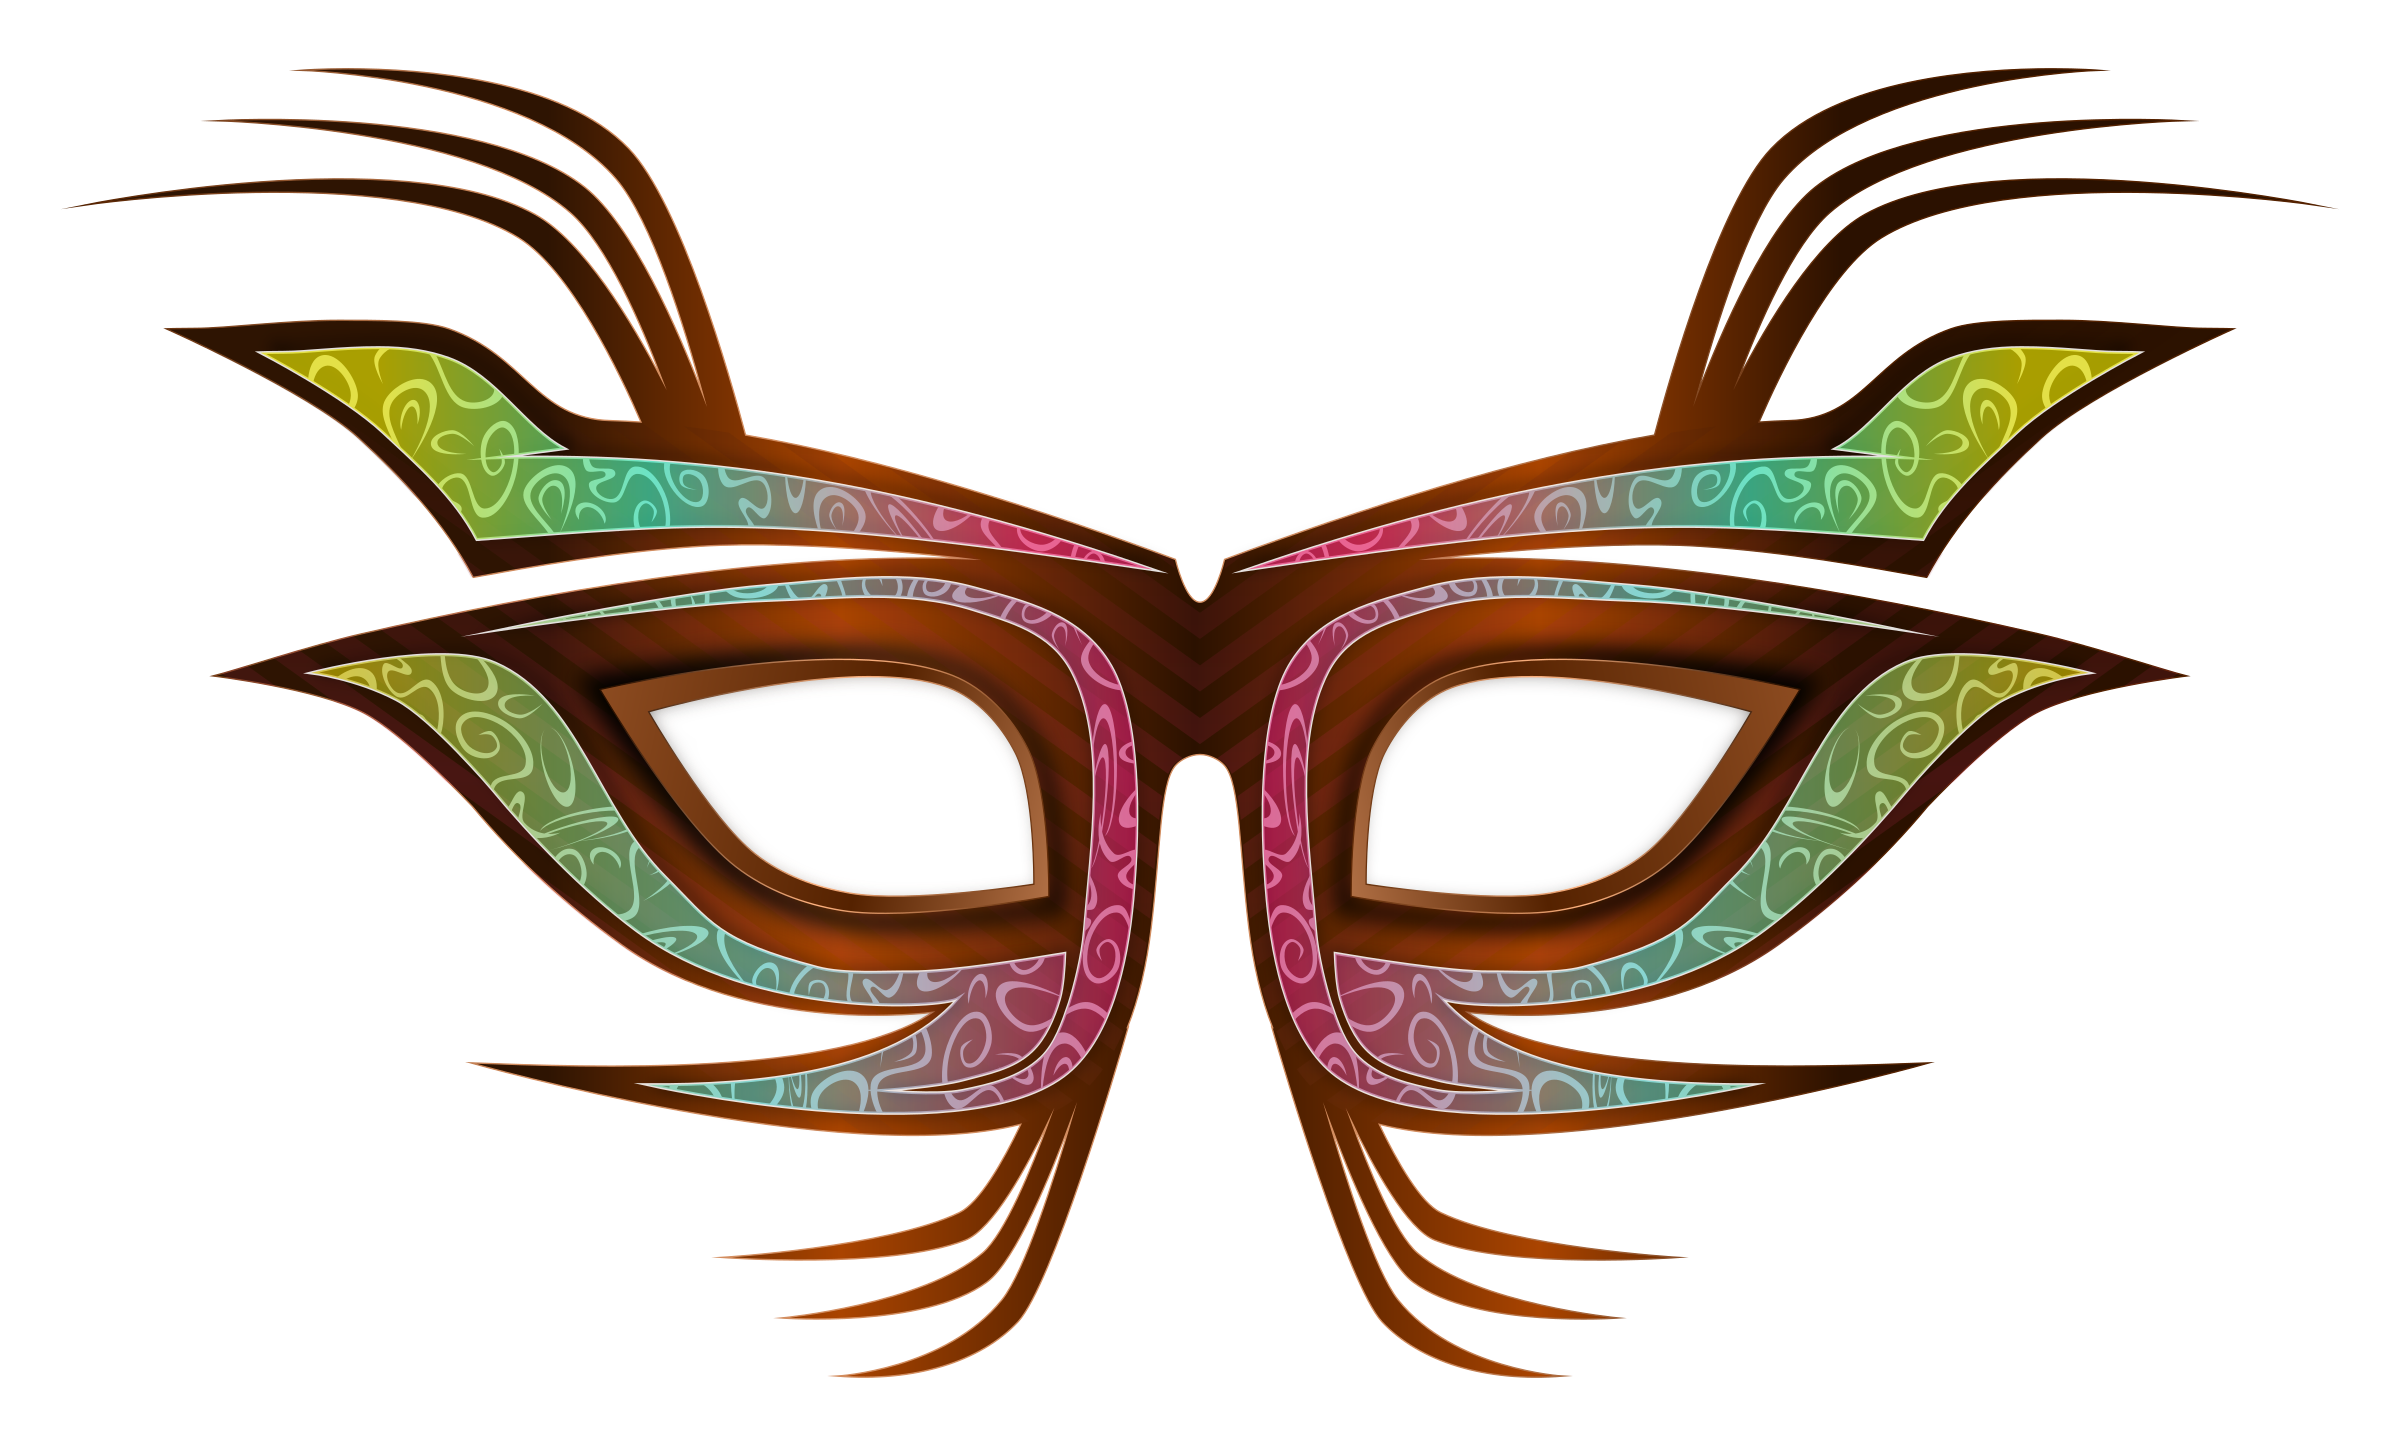 Free Masquerade Mask Cliparts, Download Free Masquerade Mask Cliparts